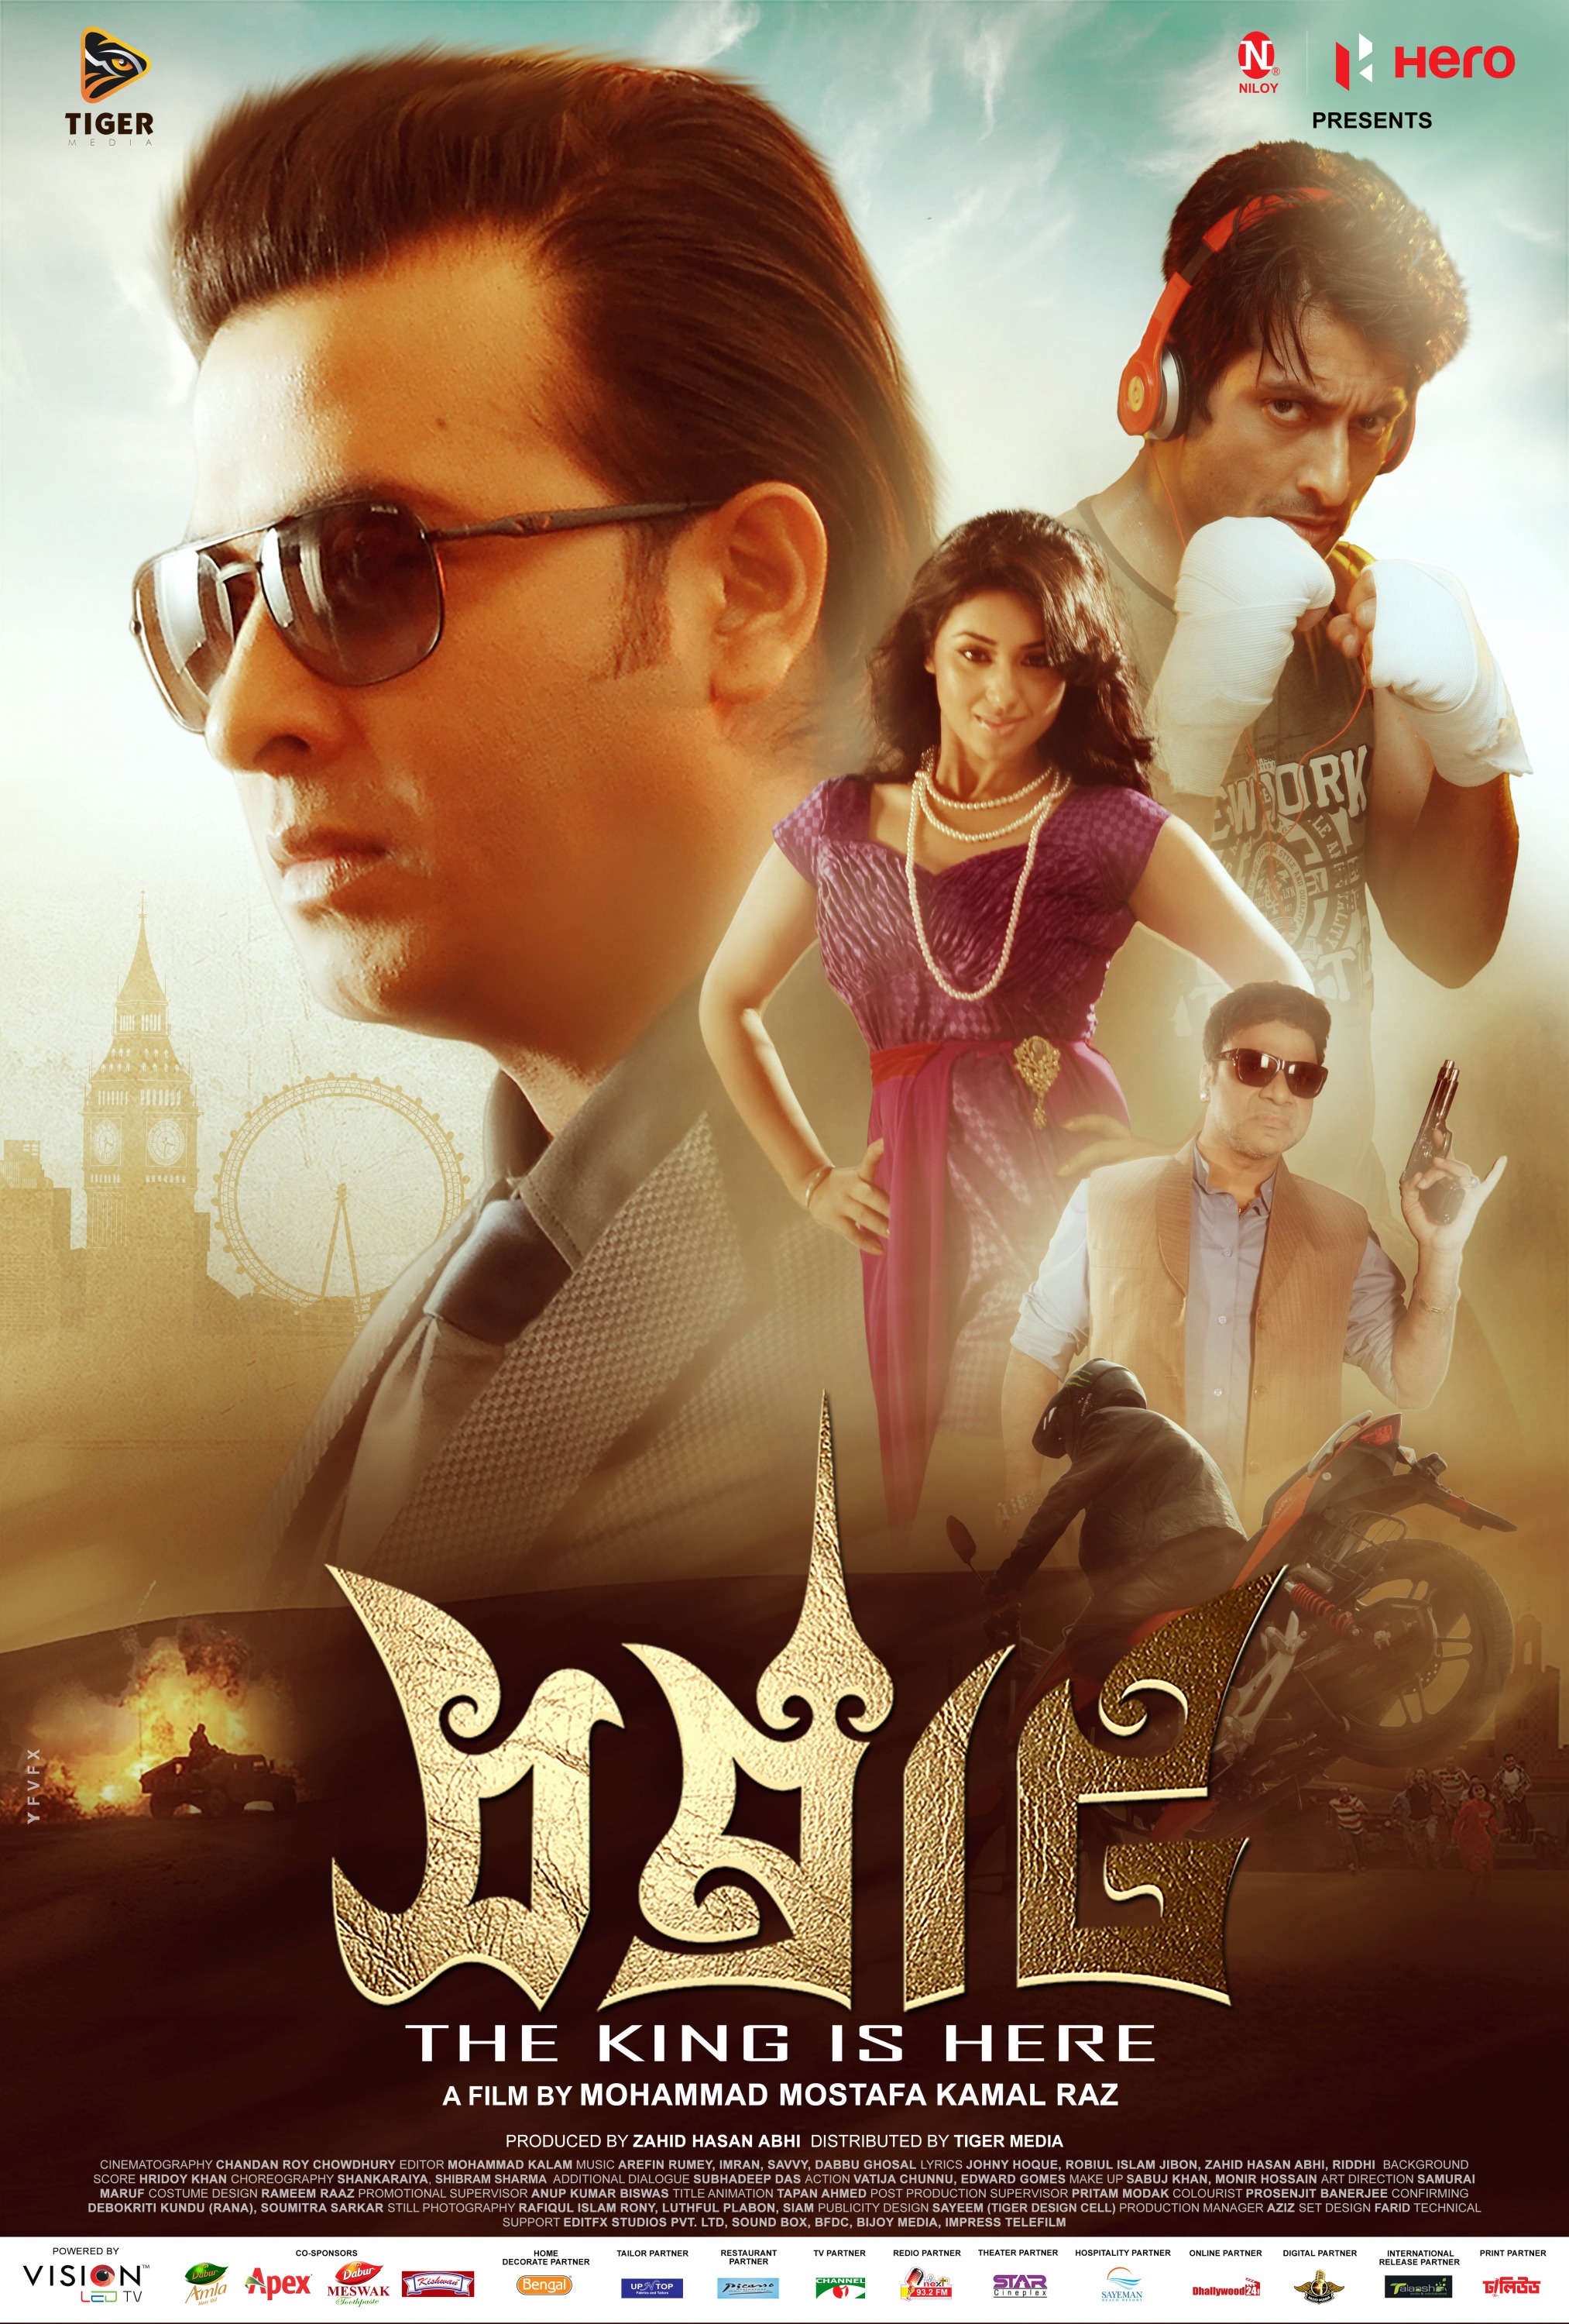 Mega Sized Movie Poster Image for Samraat (#4 of 8)